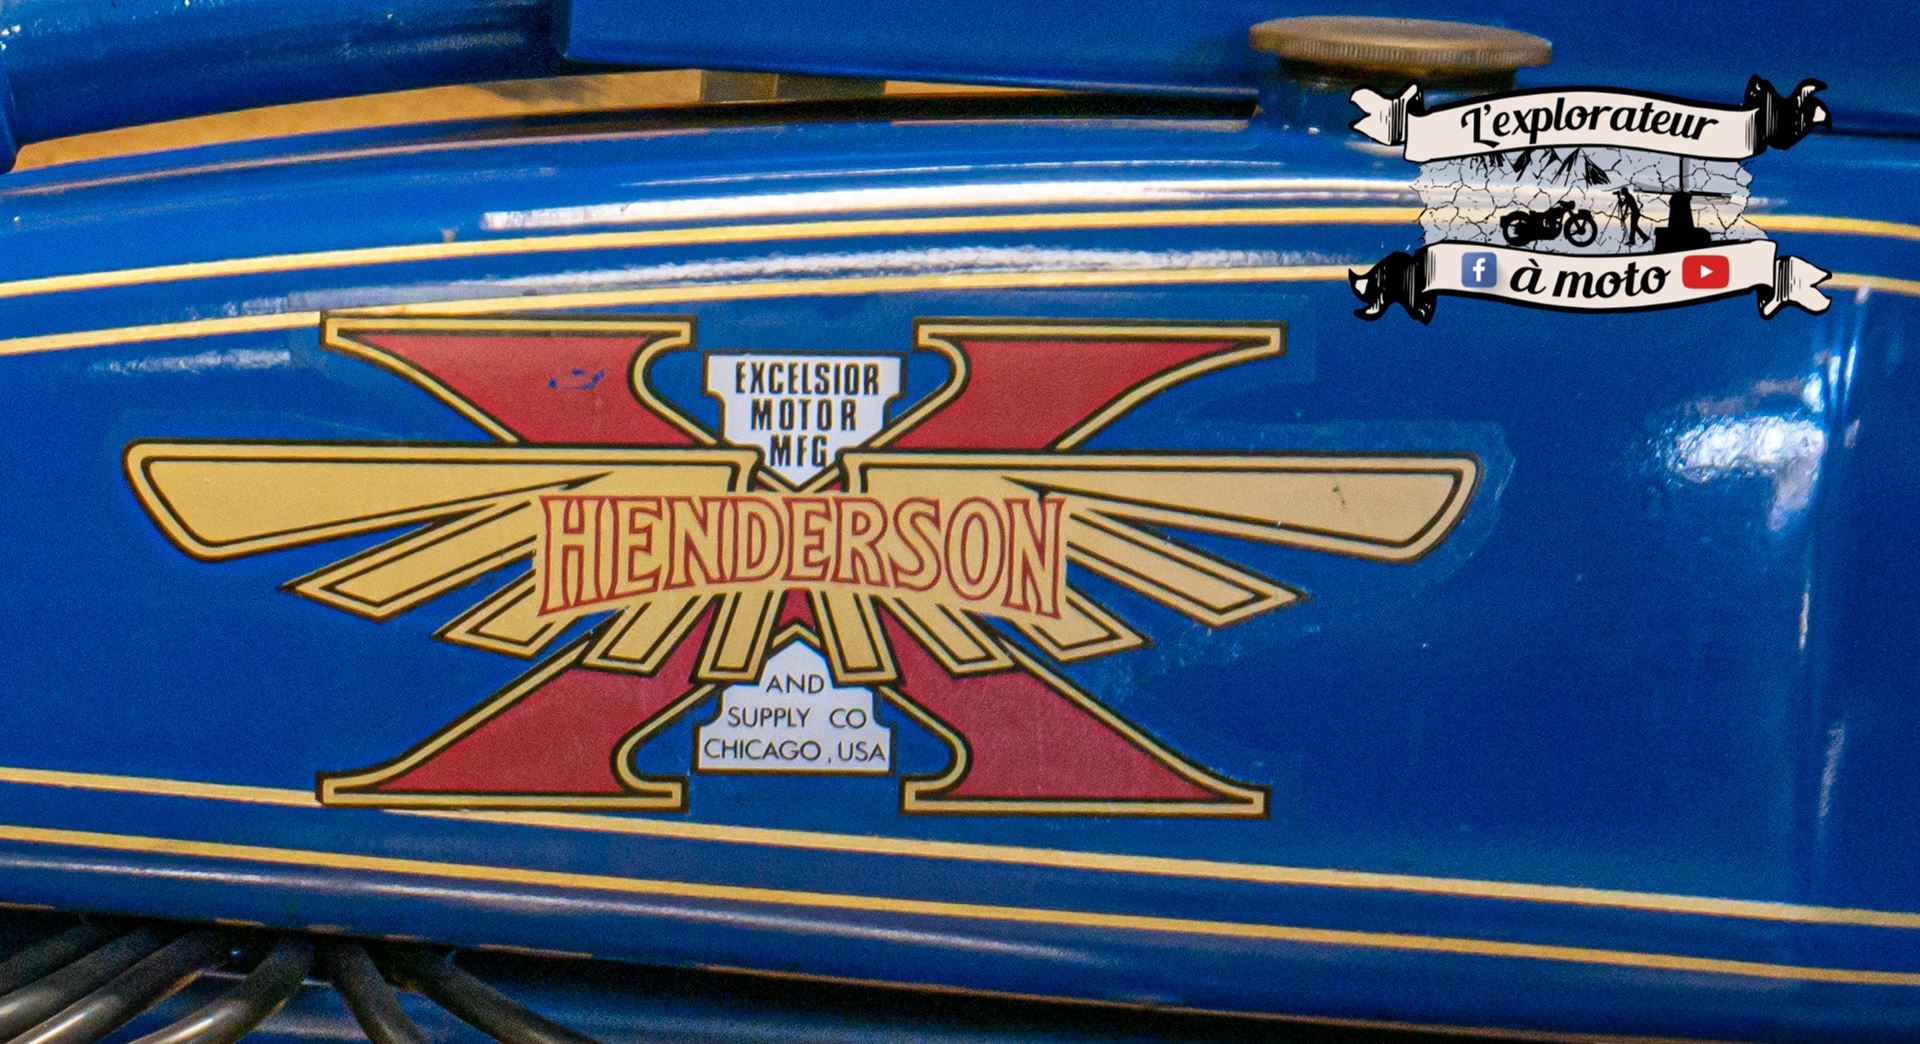 Henderson 6 cylinders 02 - lexplorateuramoto.com